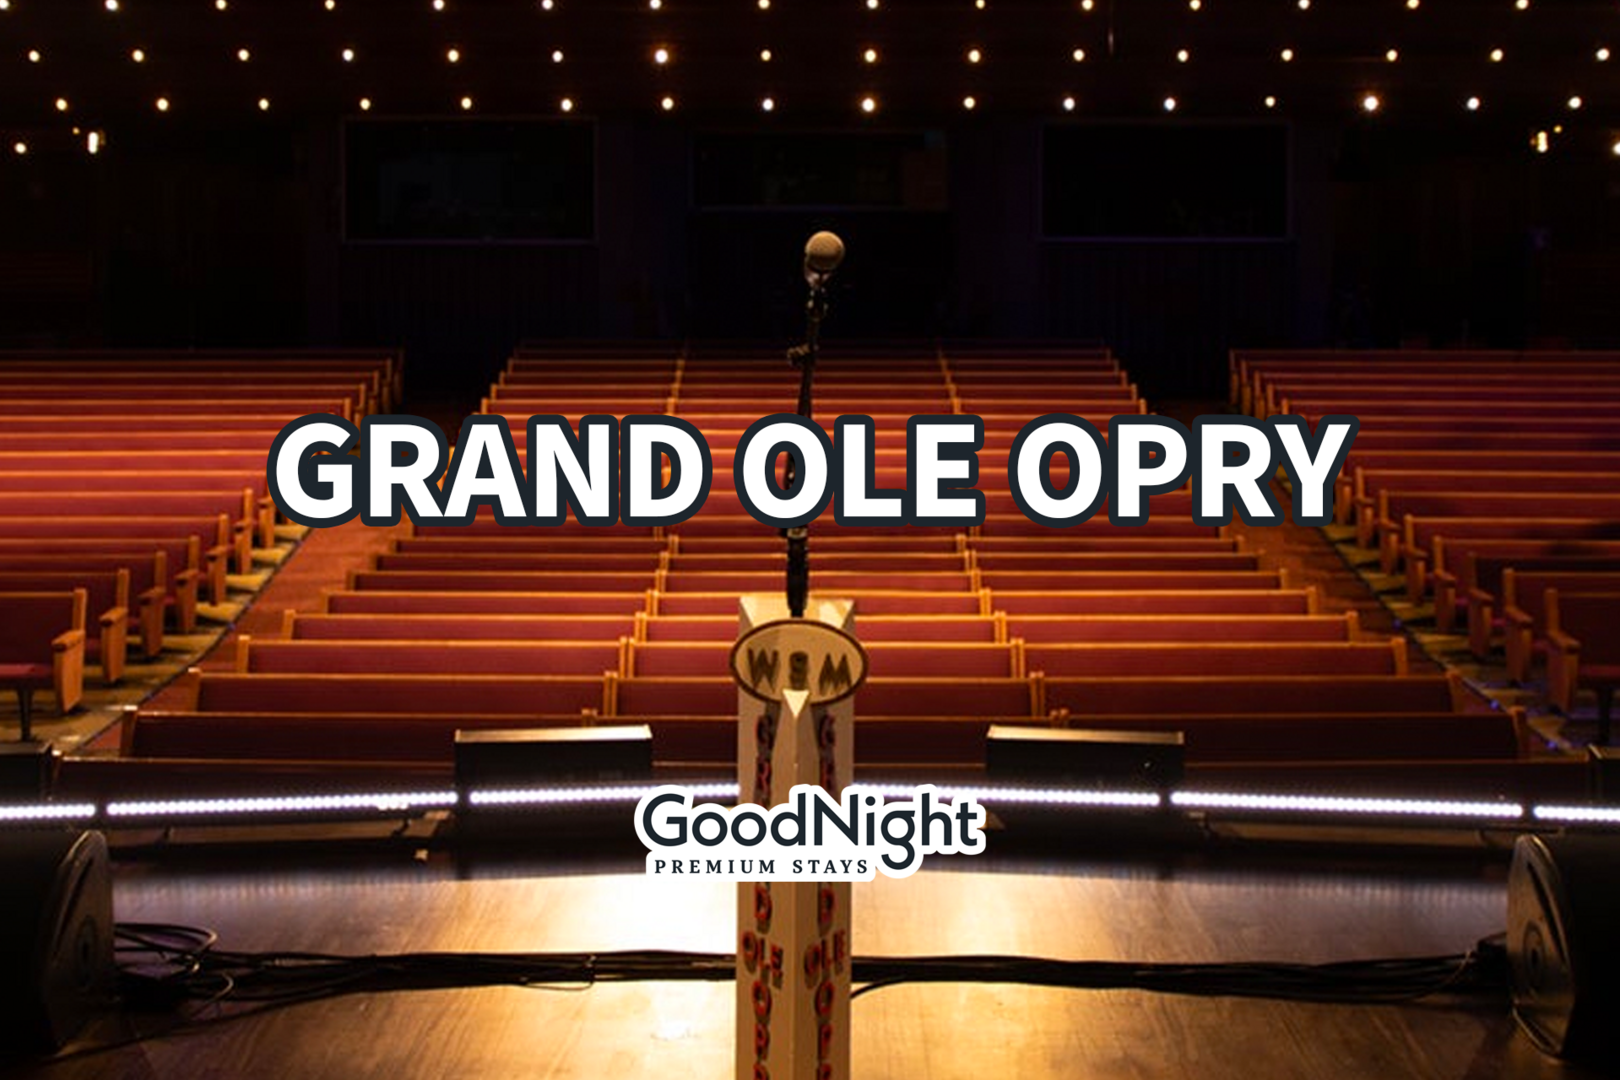 20 mins: Grand Ole Opry